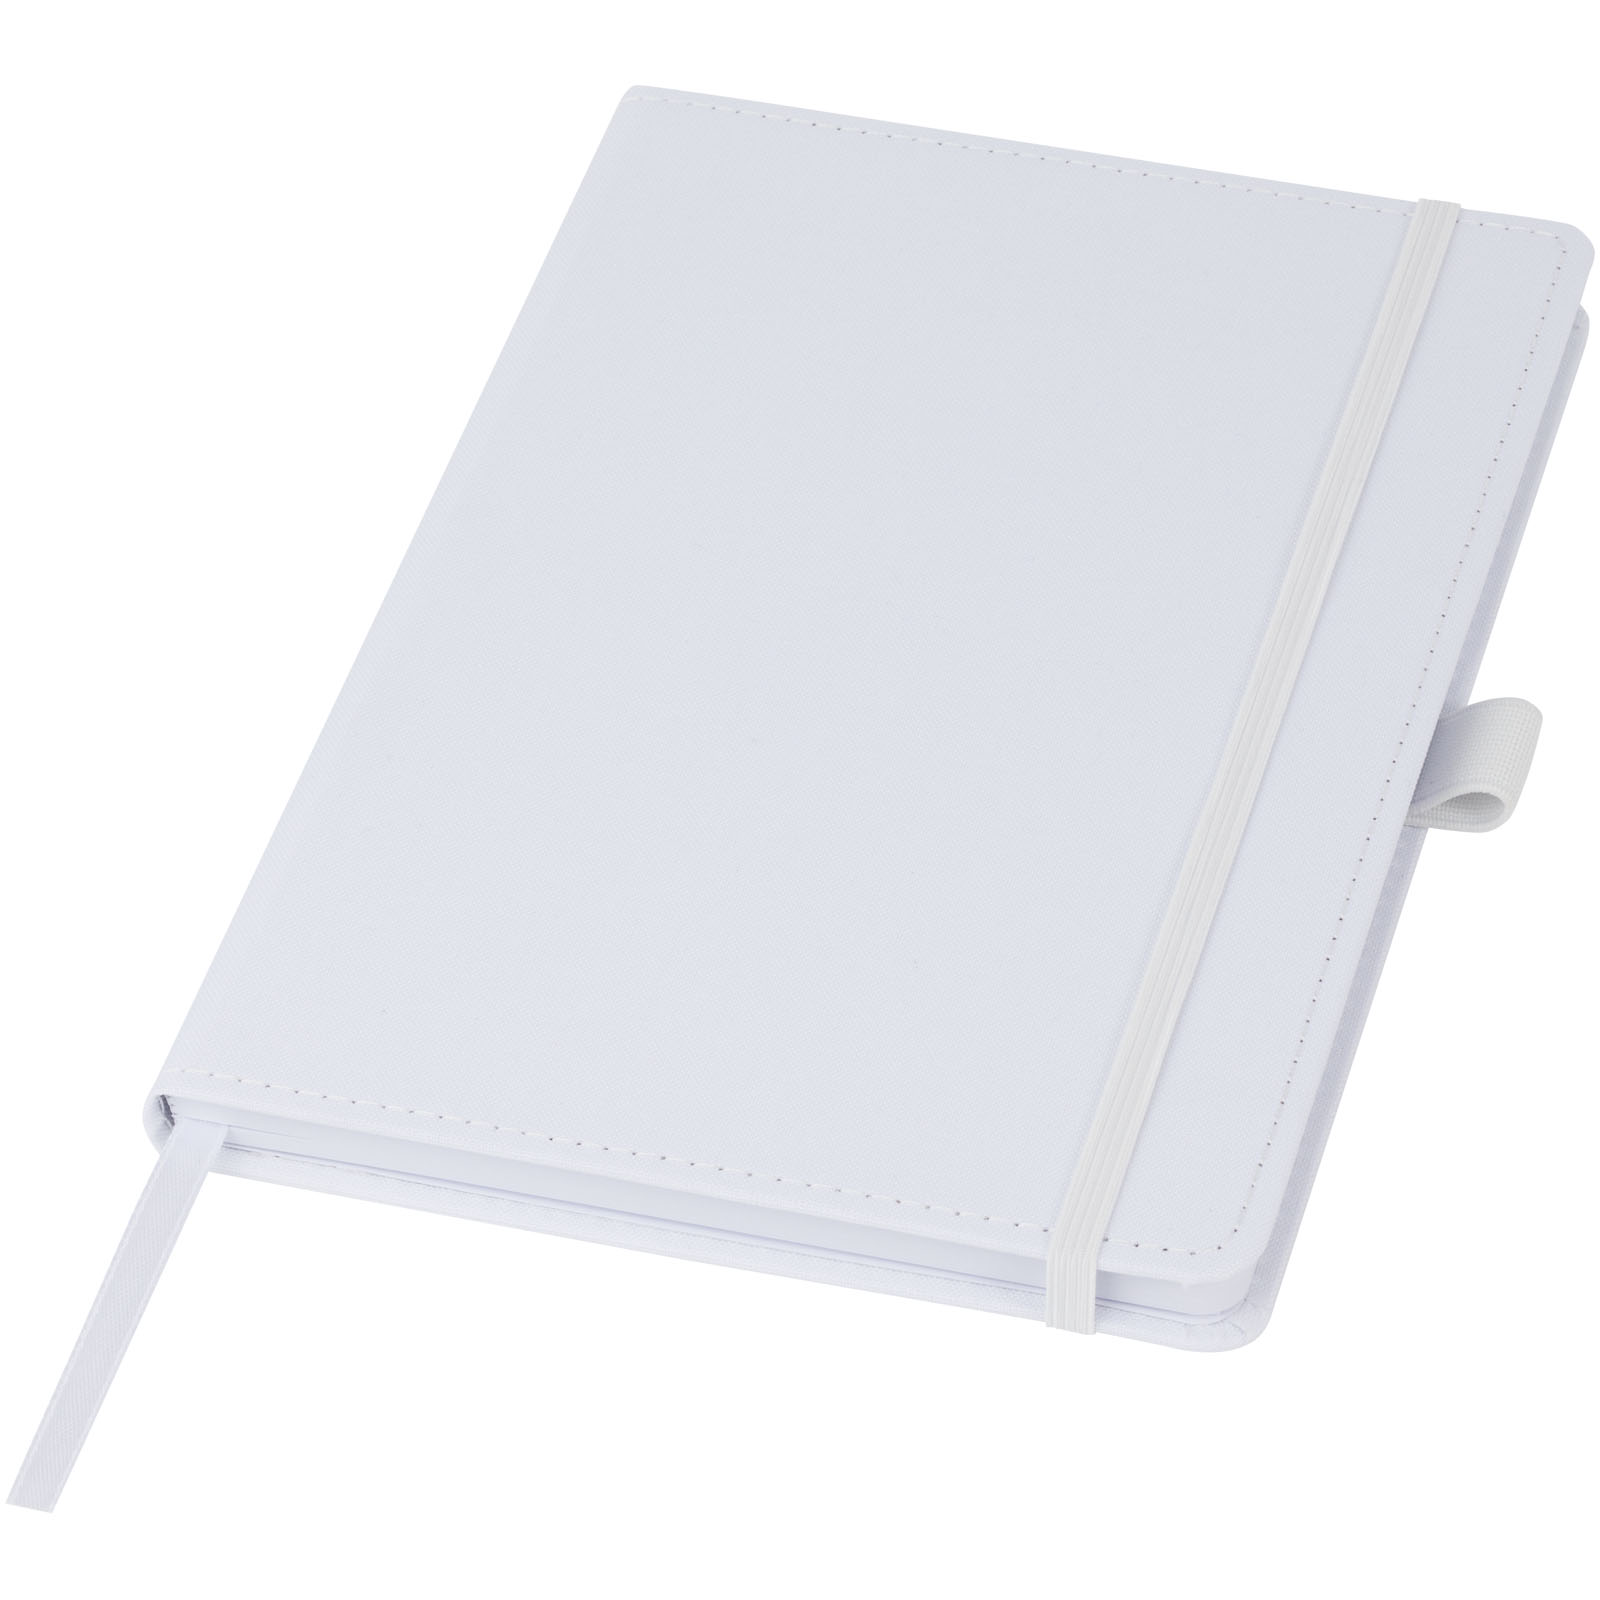 Notebooks & Desk Essentials - Thalaasa ocean-bound plastic hardcover notebook